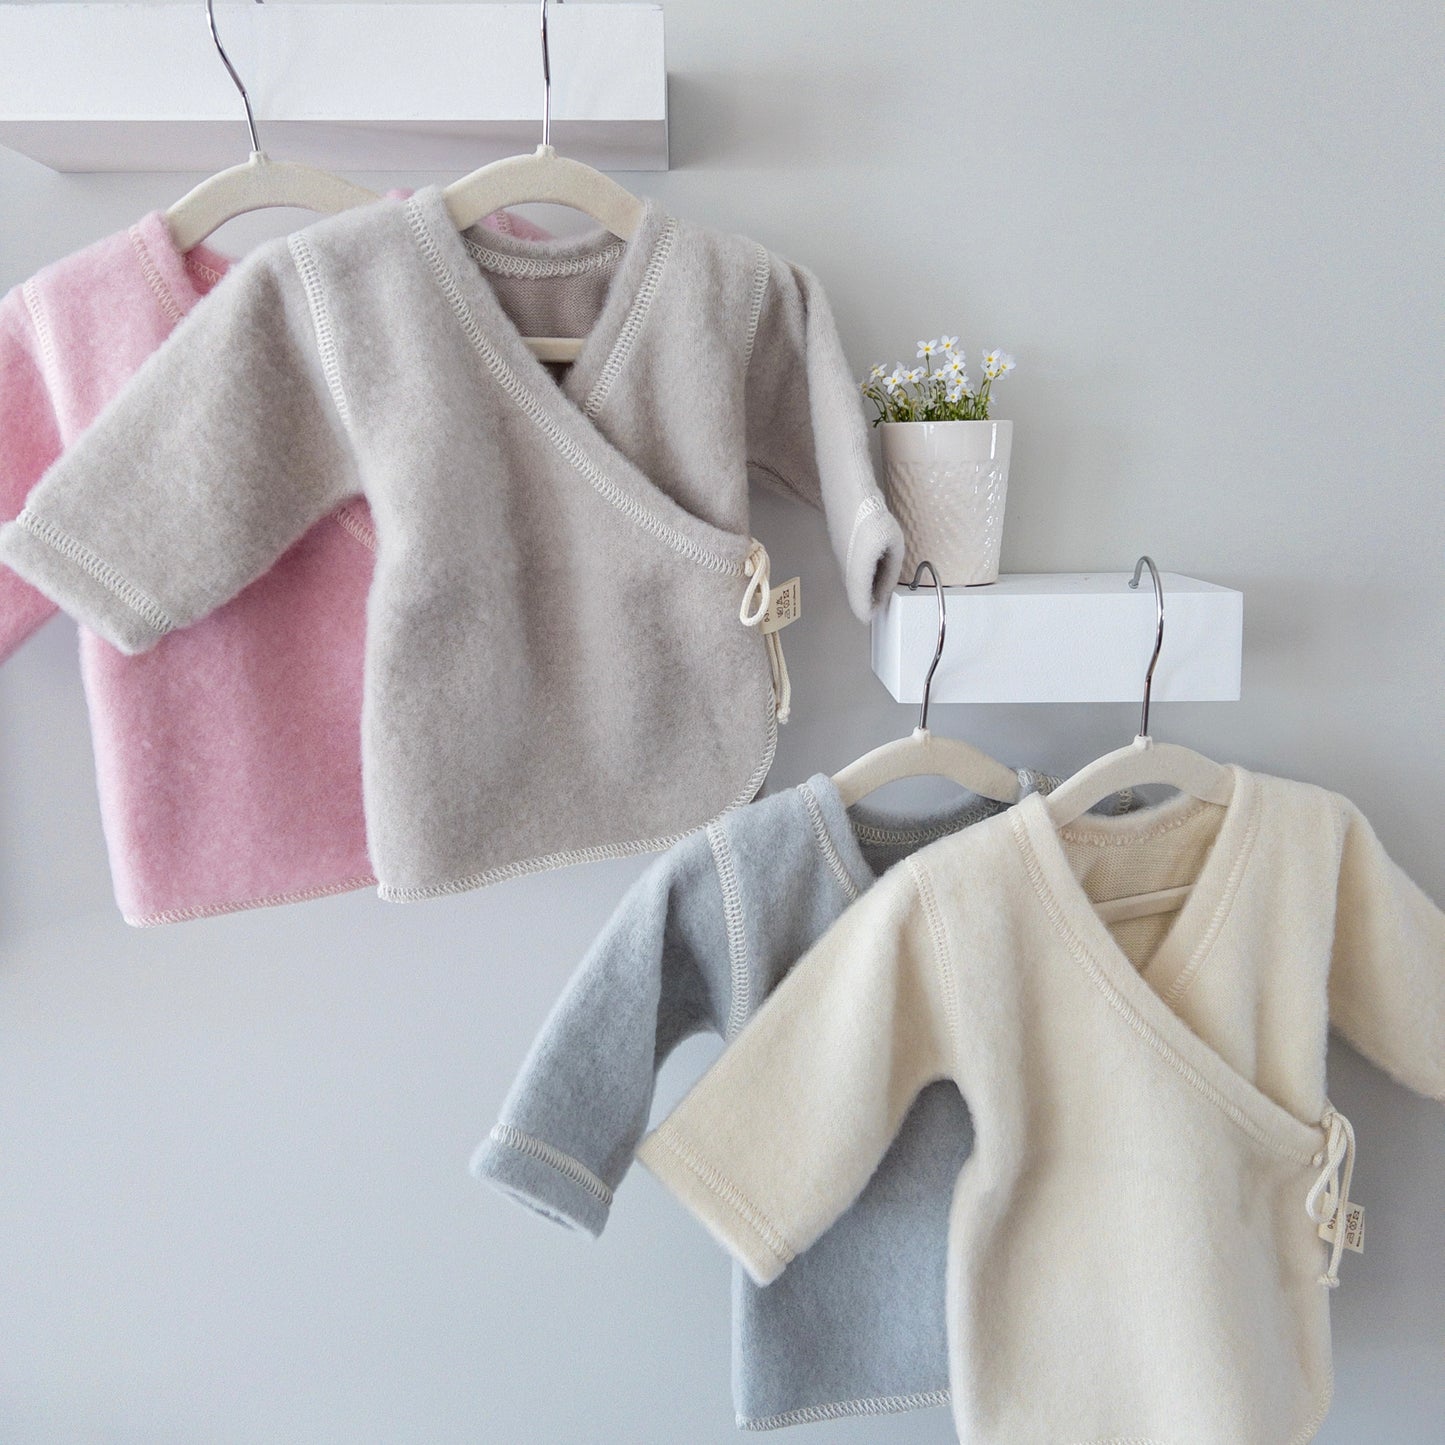 Women's Fine-Knit Cardigan in Merino Wool and Silk [704441] - £77.50 :  Cambridge Baby, Organic Natural Clothing